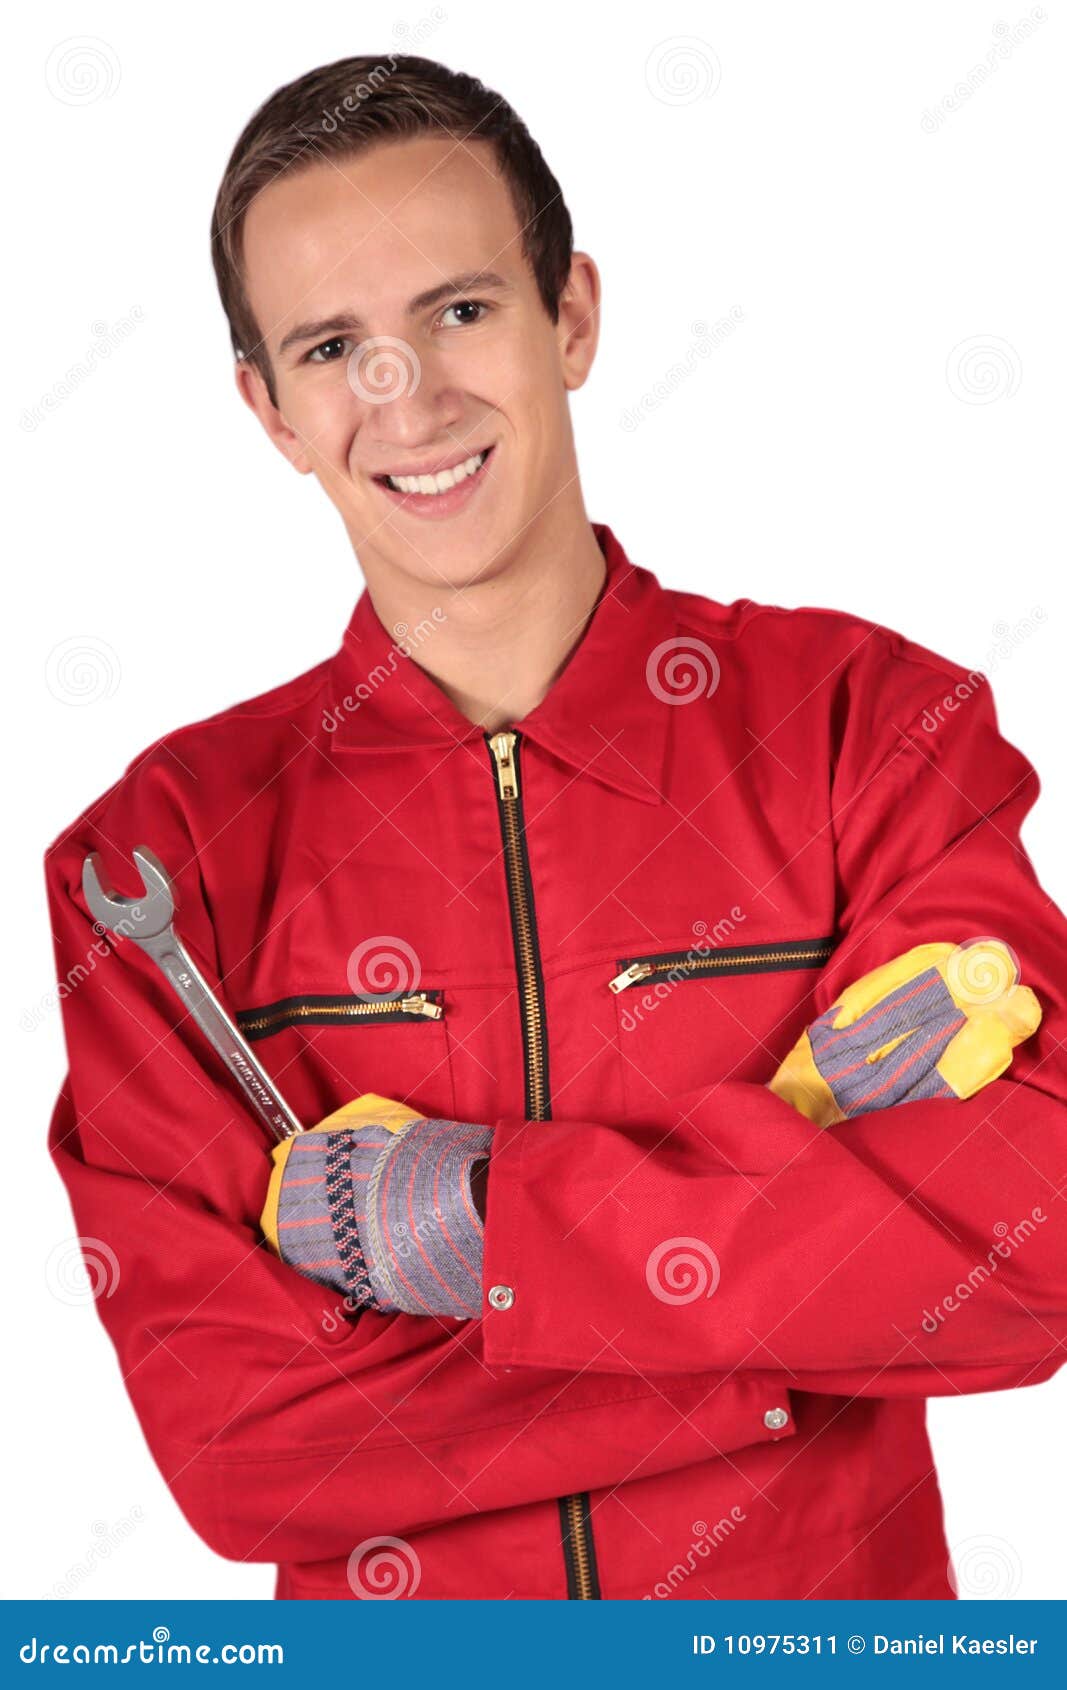 mechanic trainee